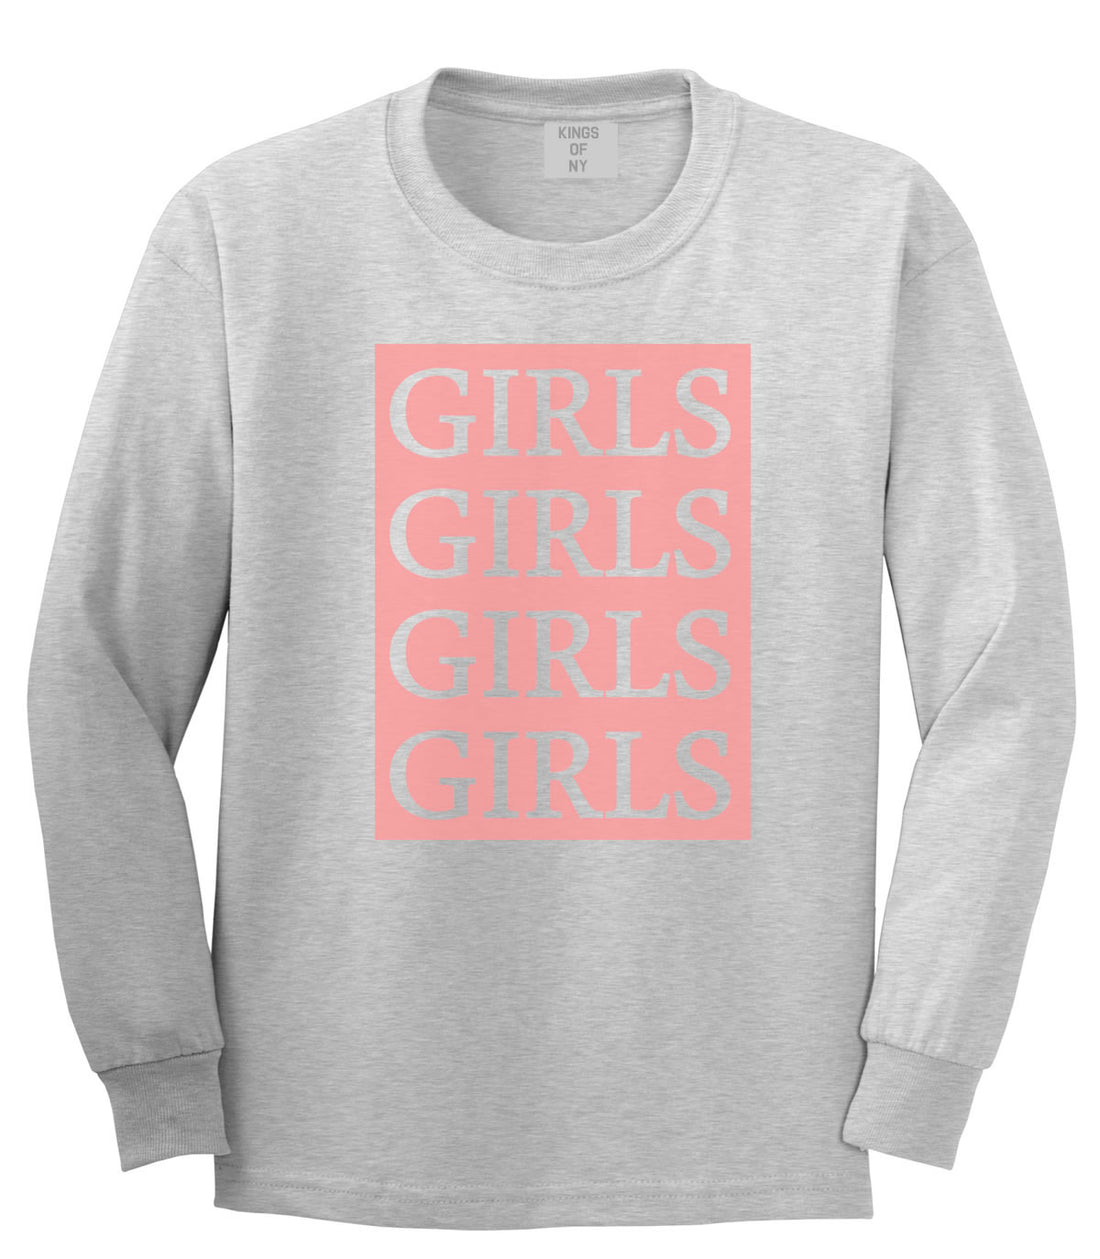 Girls Girls Girls Boys Kids Long Sleeve T-Shirt in Grey by Kings Of NY